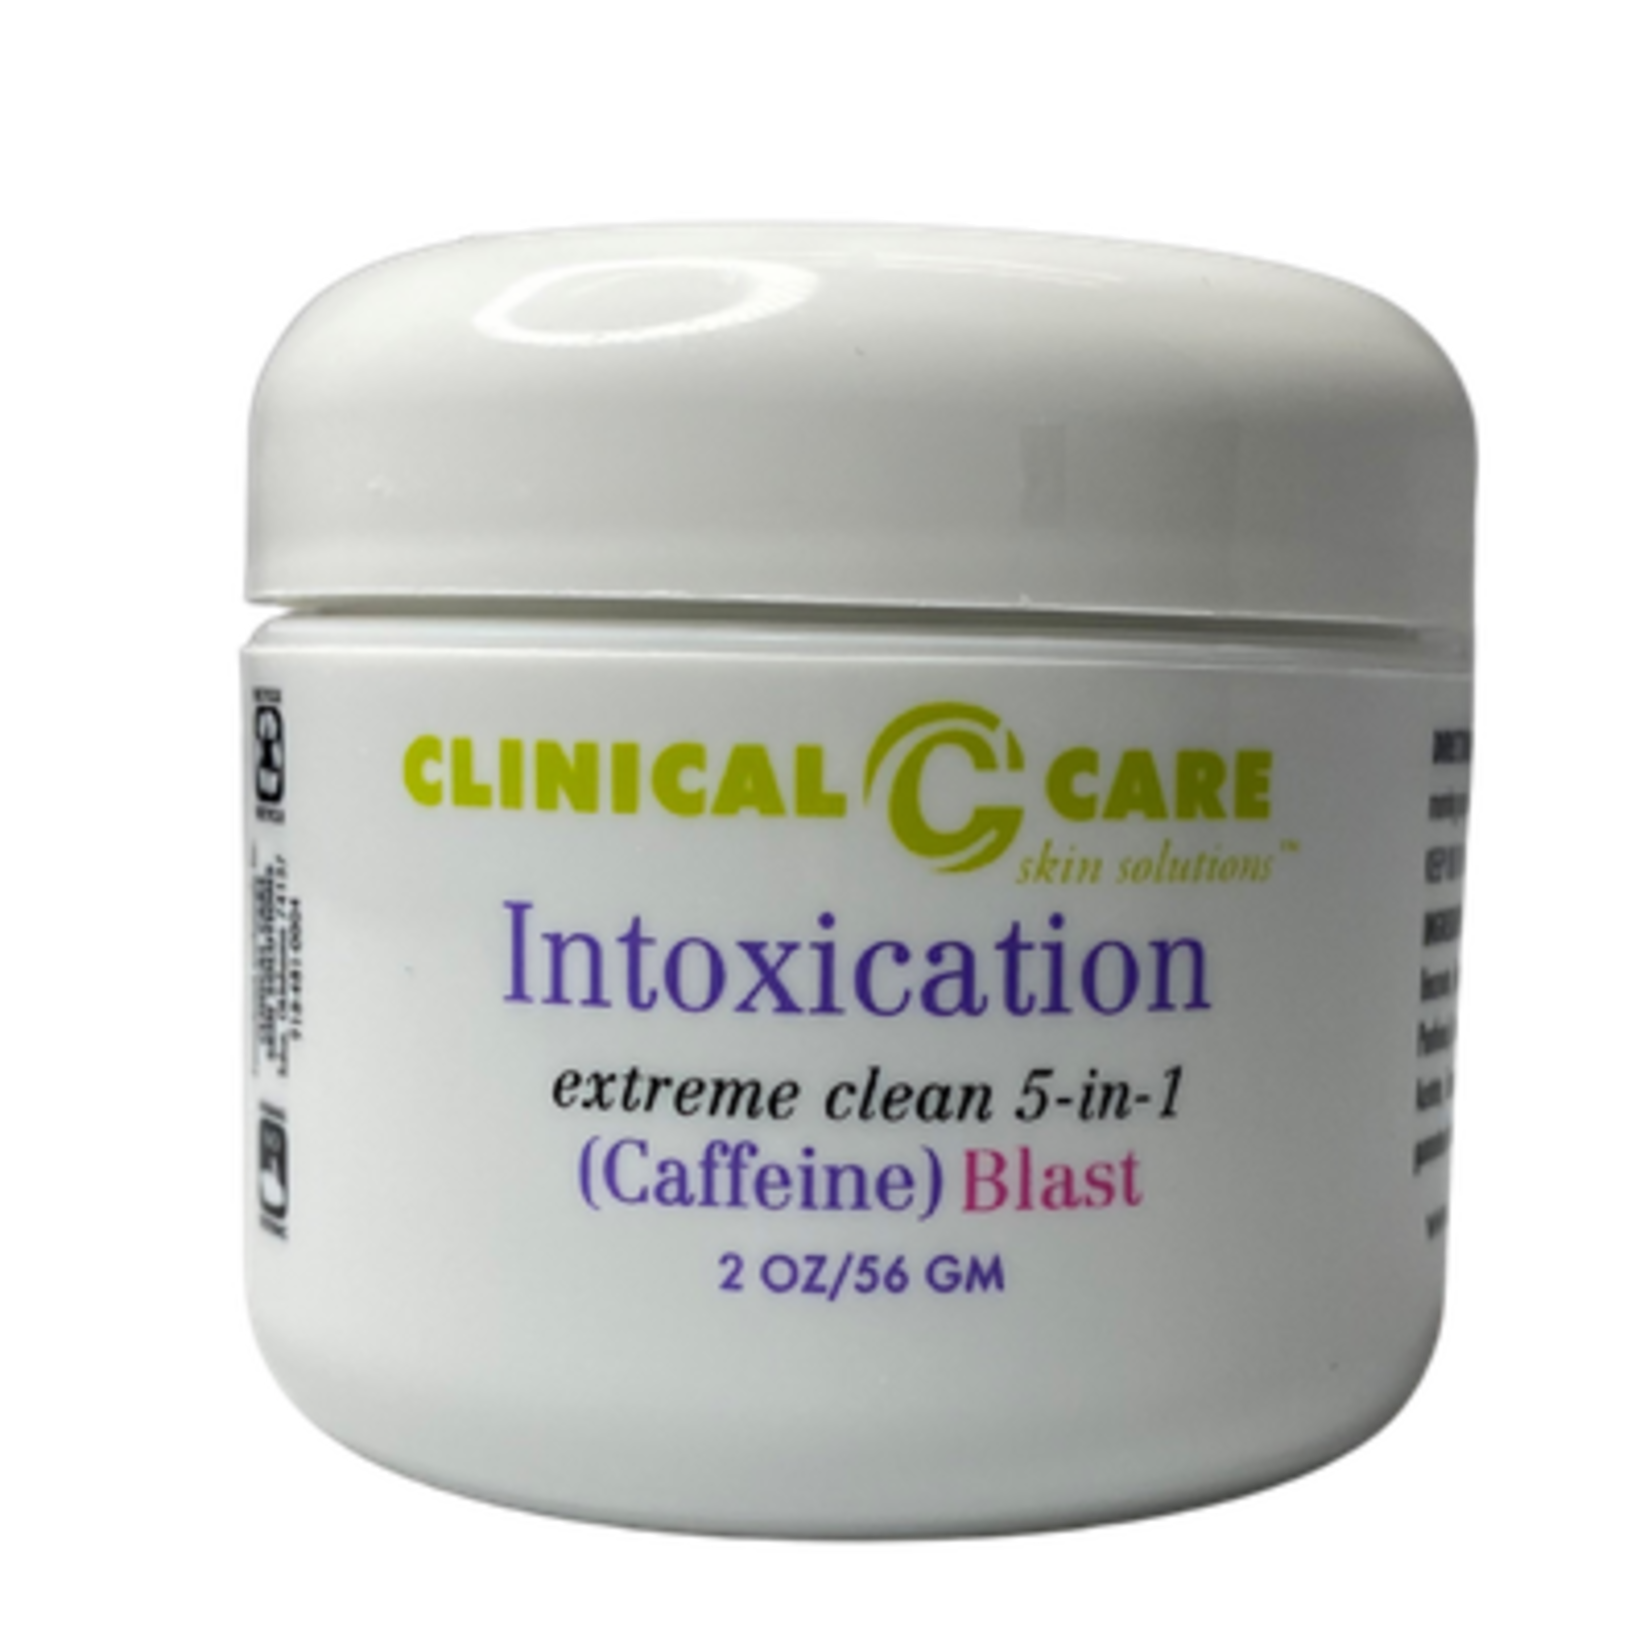 Clinical Care Clinical Care Skin Solutions Caffeine Blast Intoxication 2oz